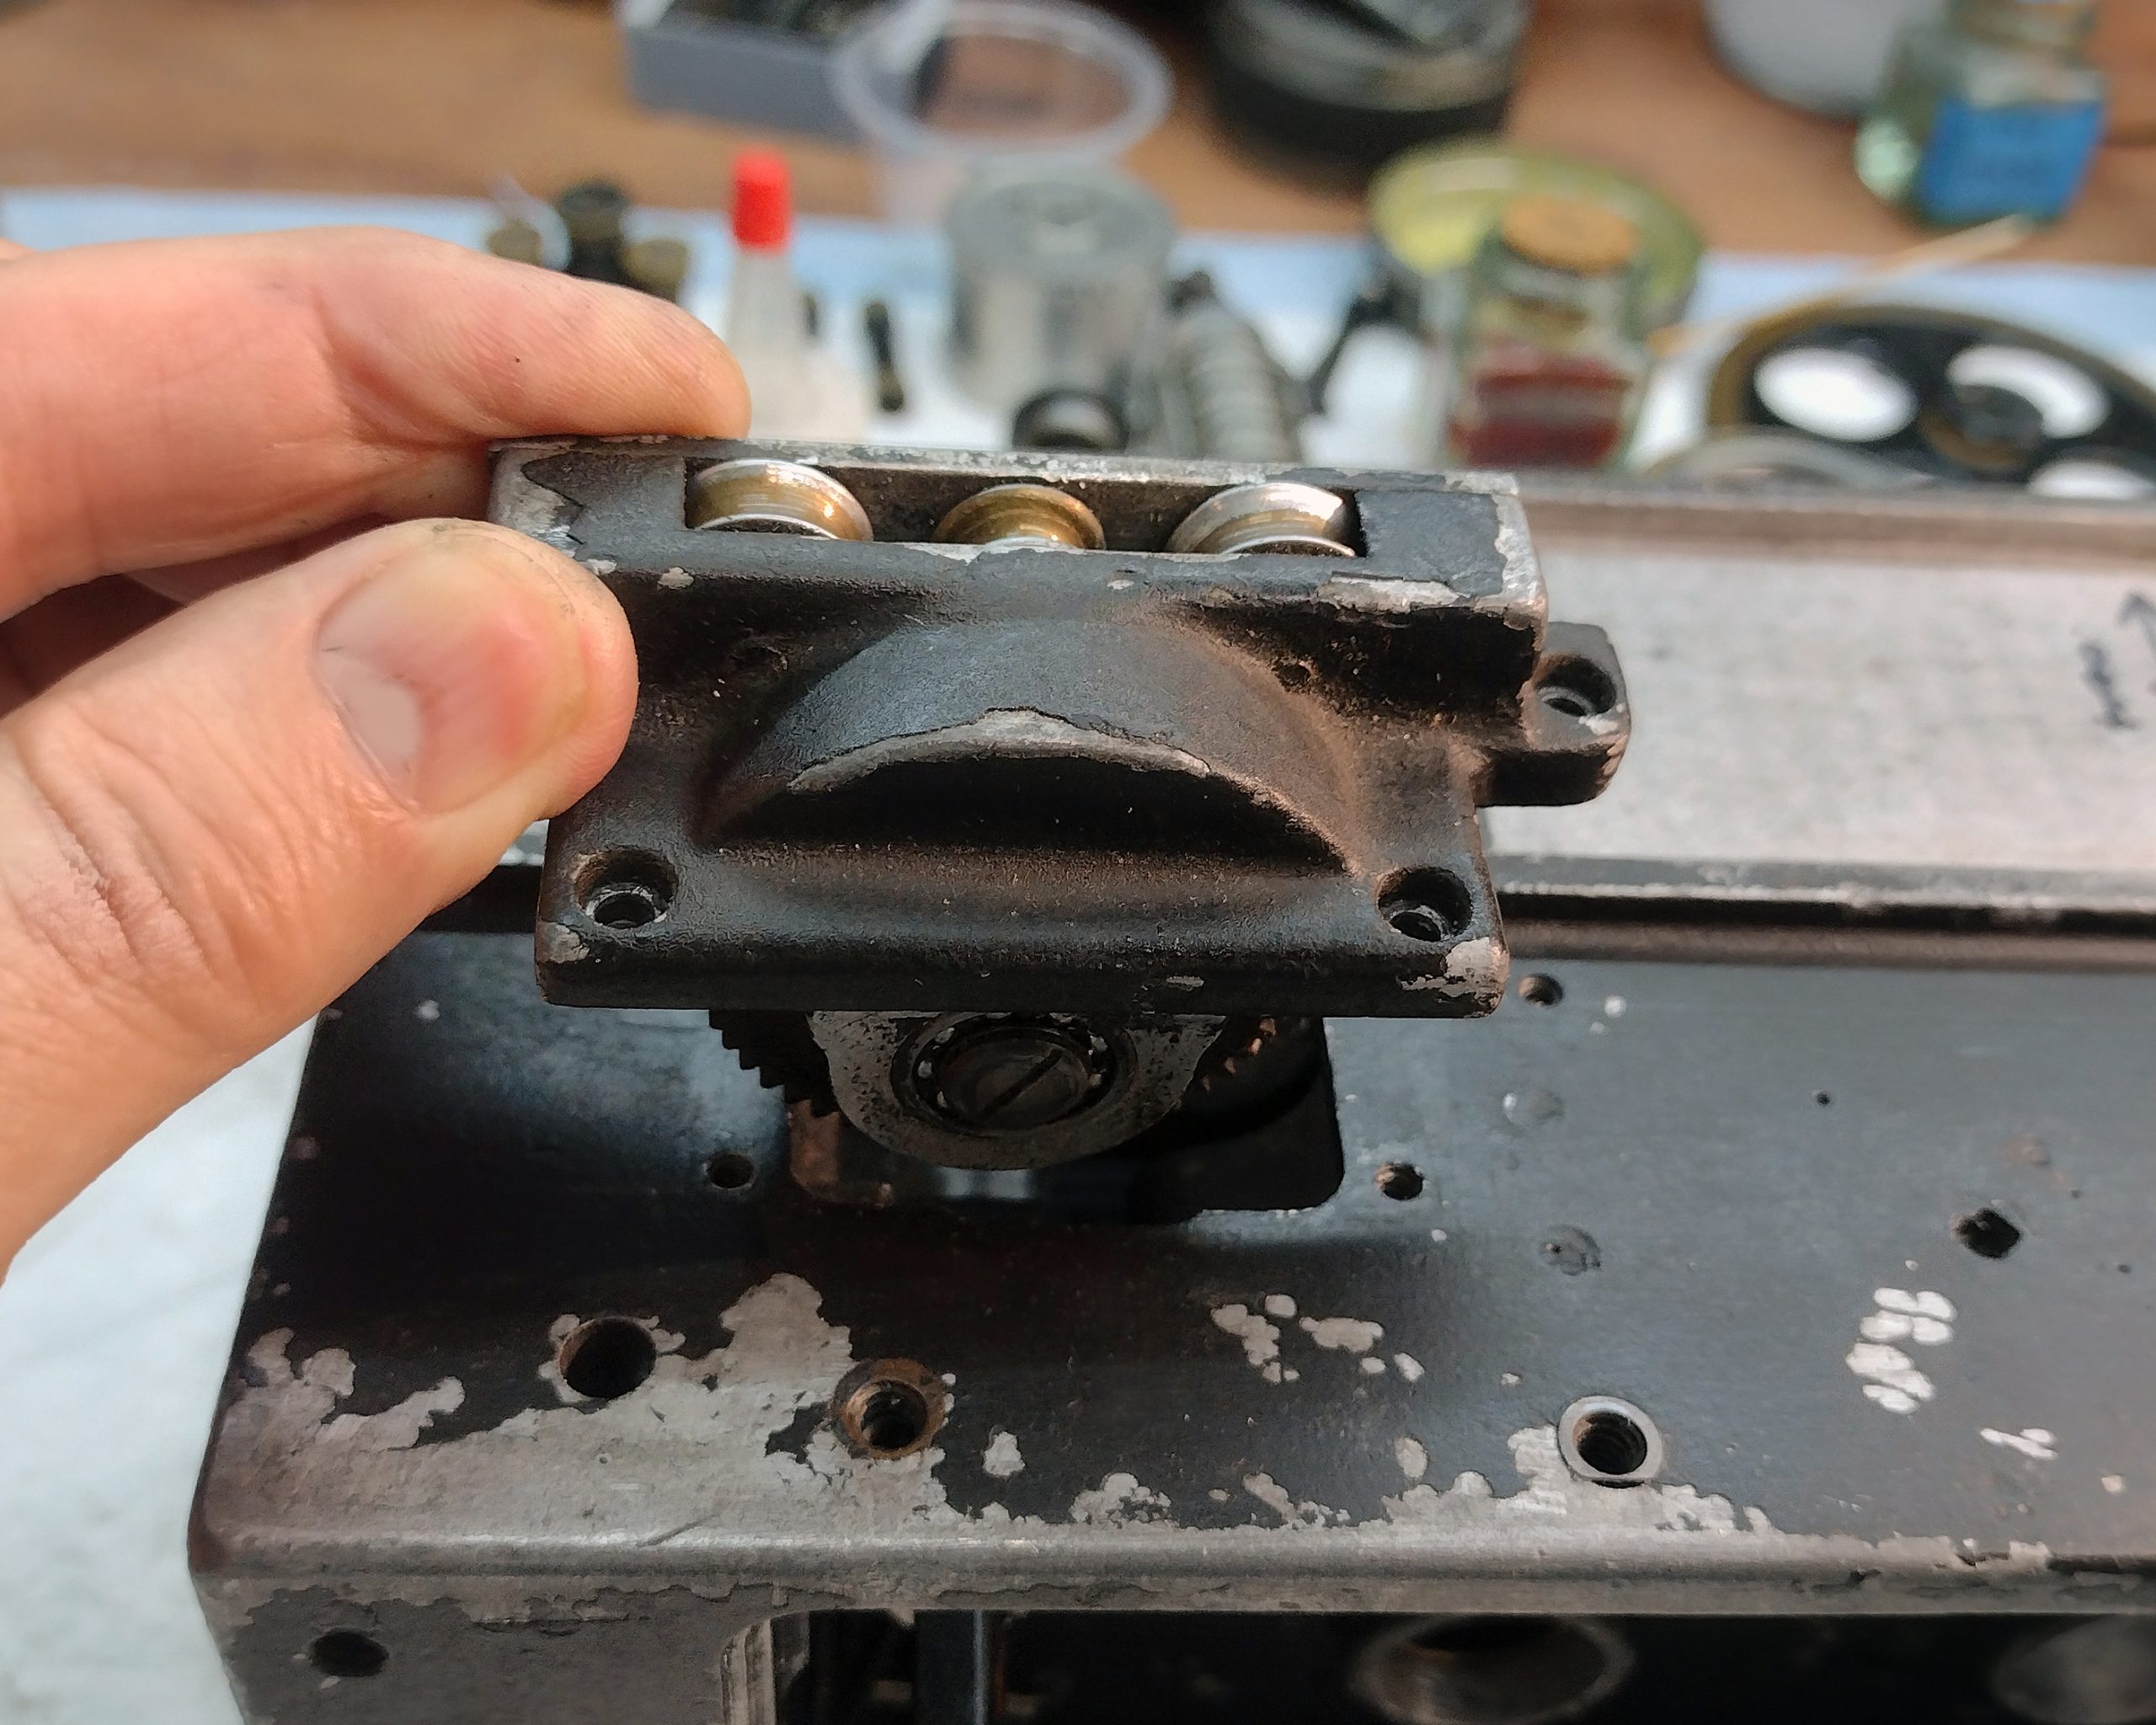 Mitchell Standard 46 magazine drive belt clutch assembly being reinstalled.